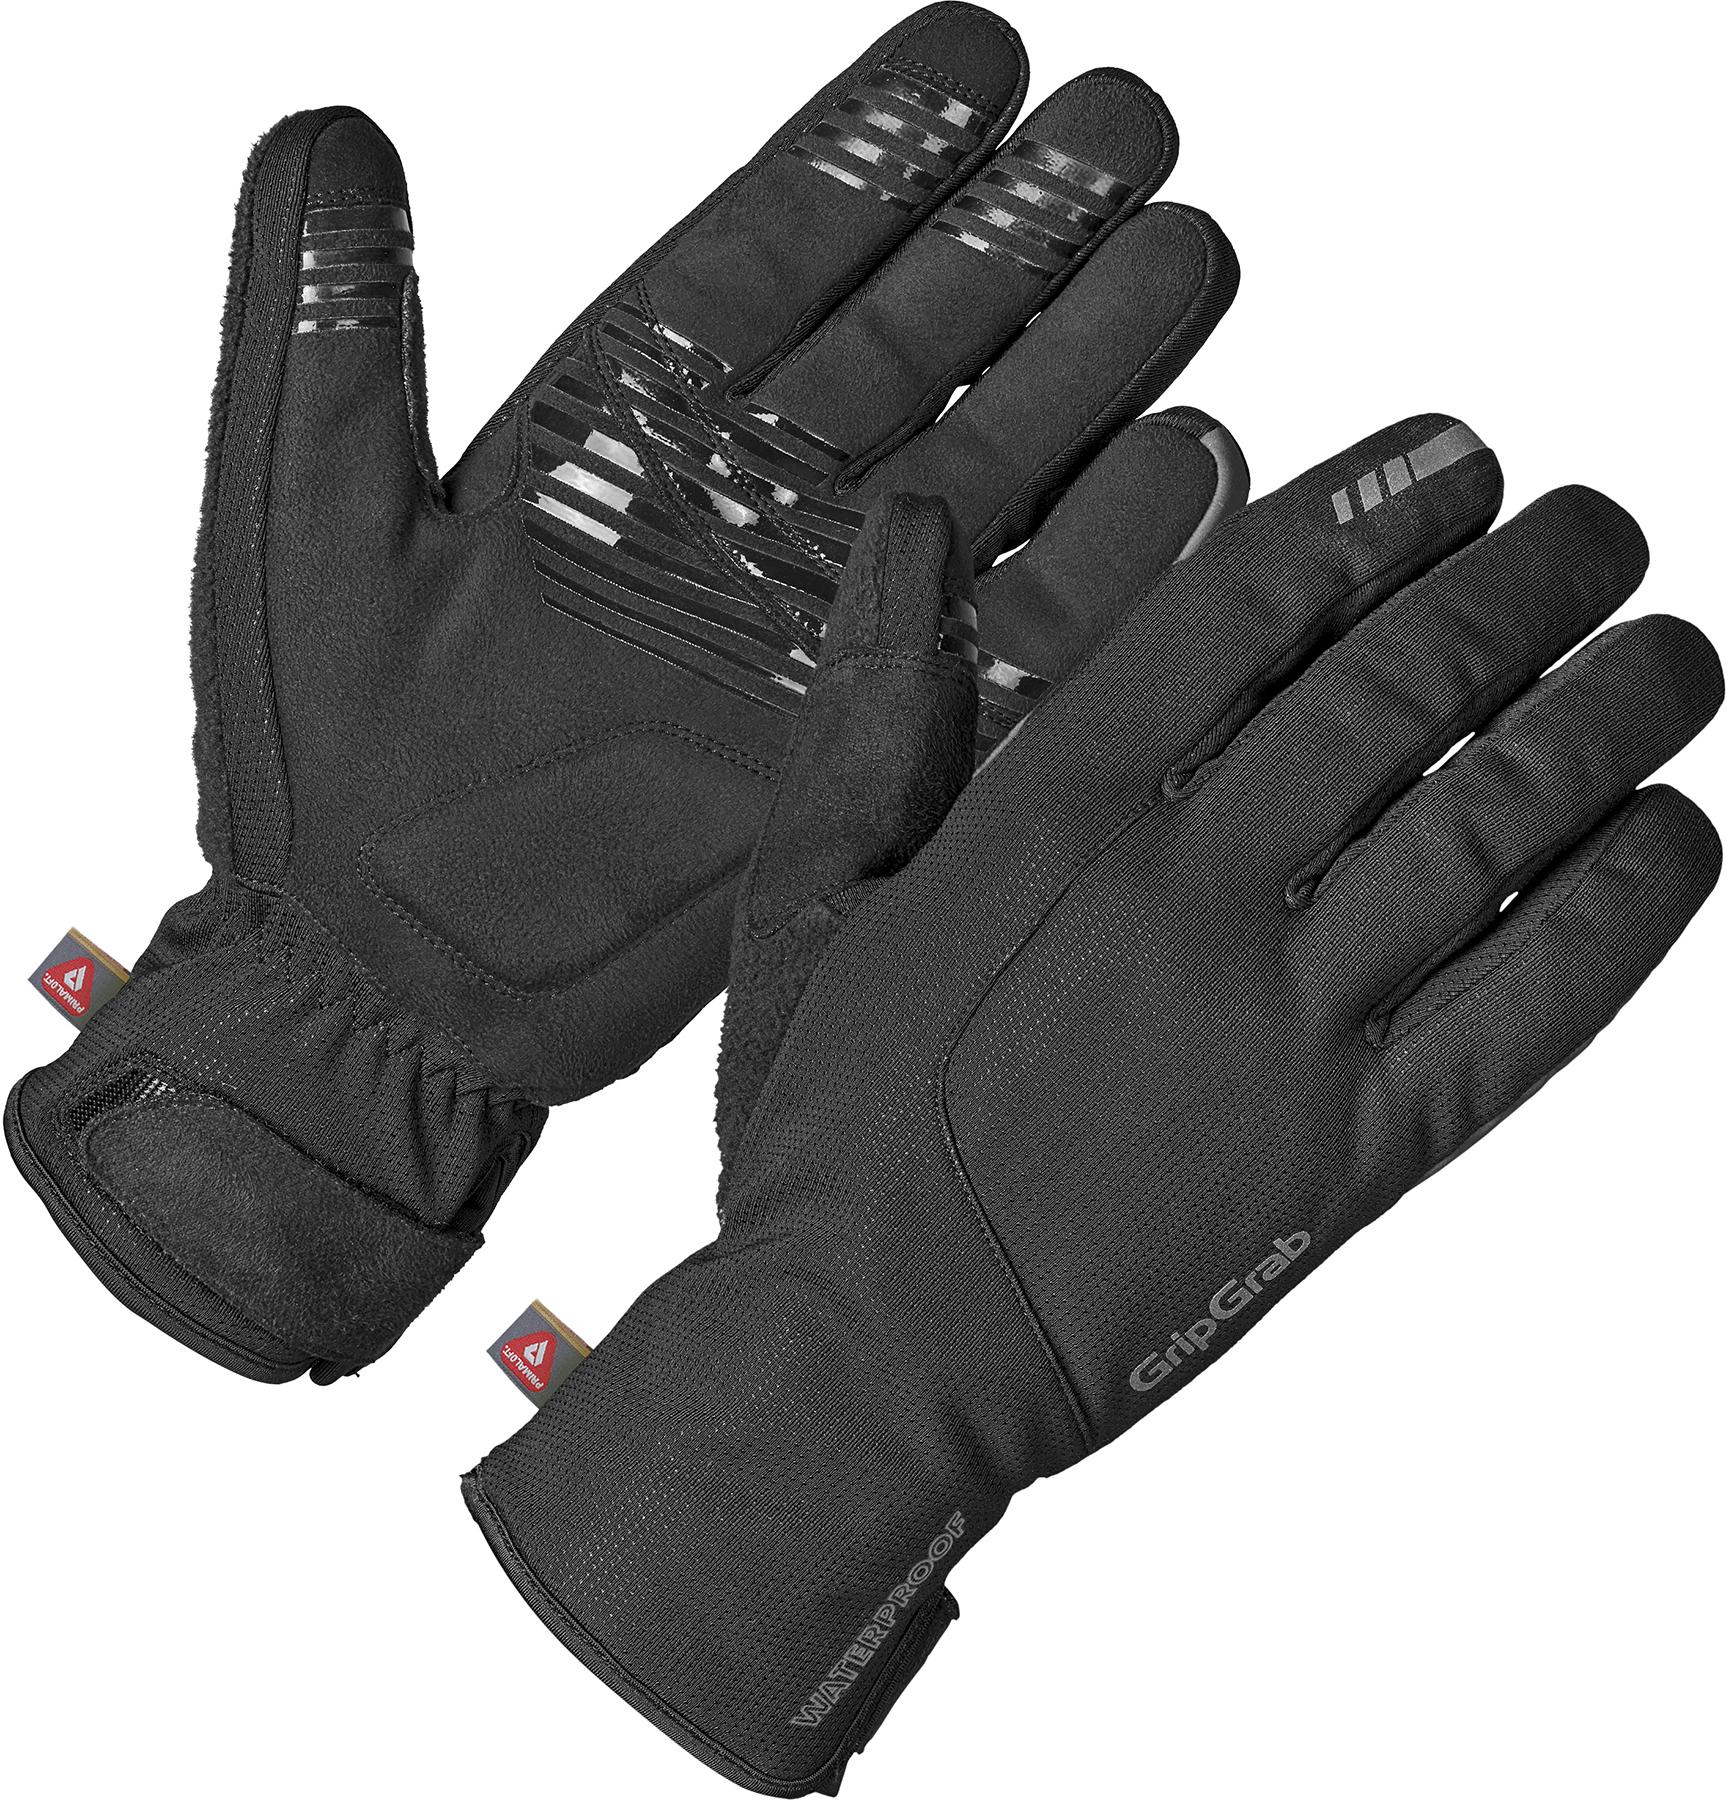 Gripgrab Polaris 2 Waterproof Winter Gloves  Black